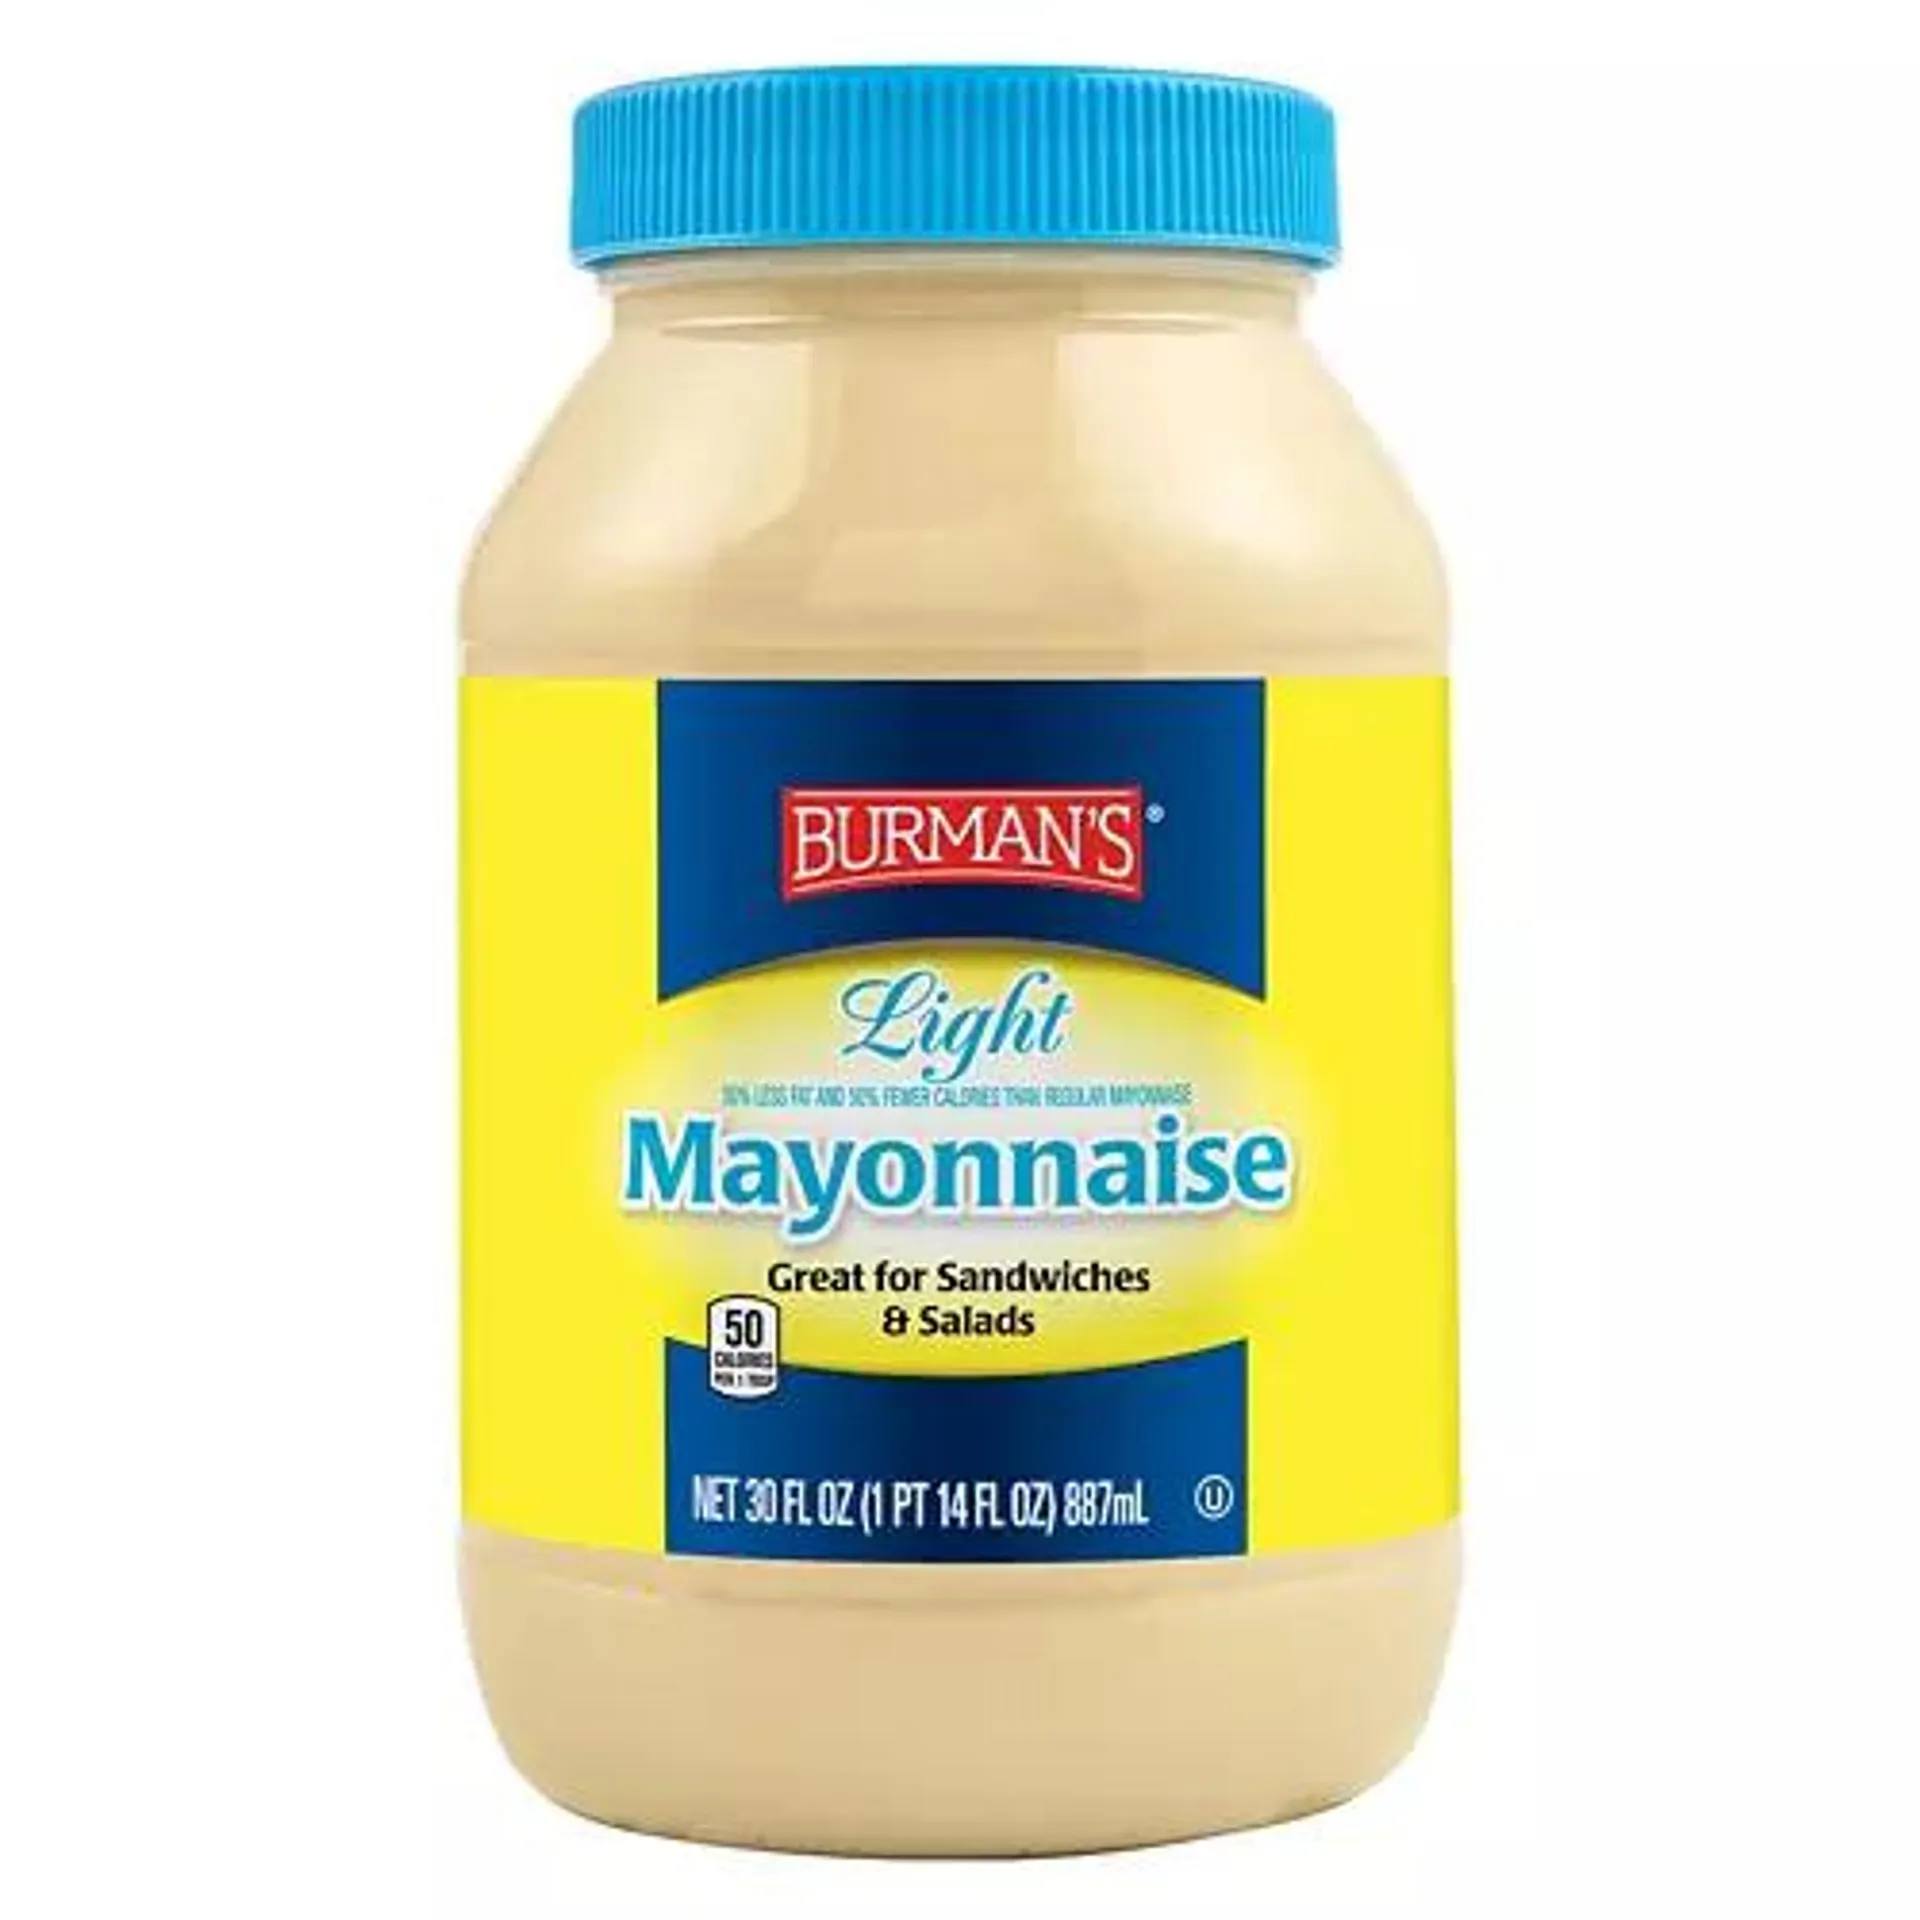 Light Mayonnaise, 30 fl oz